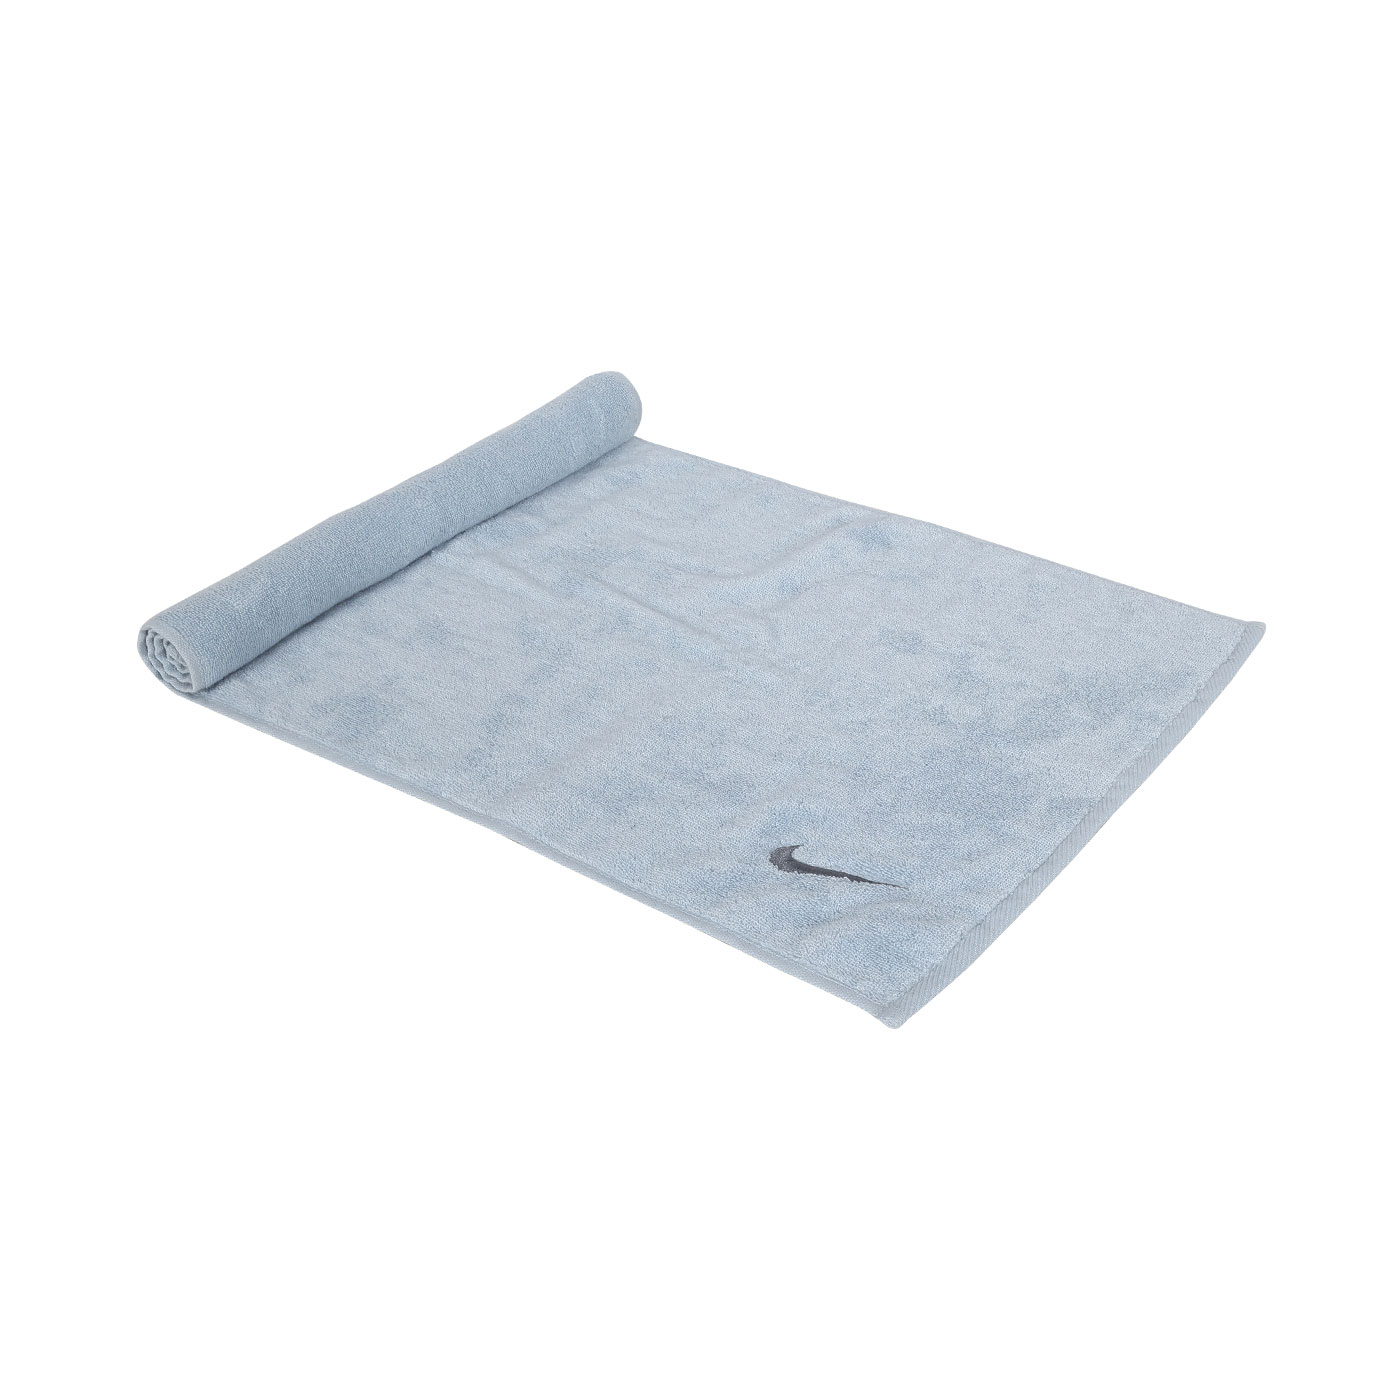 NIKE SOLID CORE 毛巾(80x35cm)  N1001541409NS - 淺水藍深灰